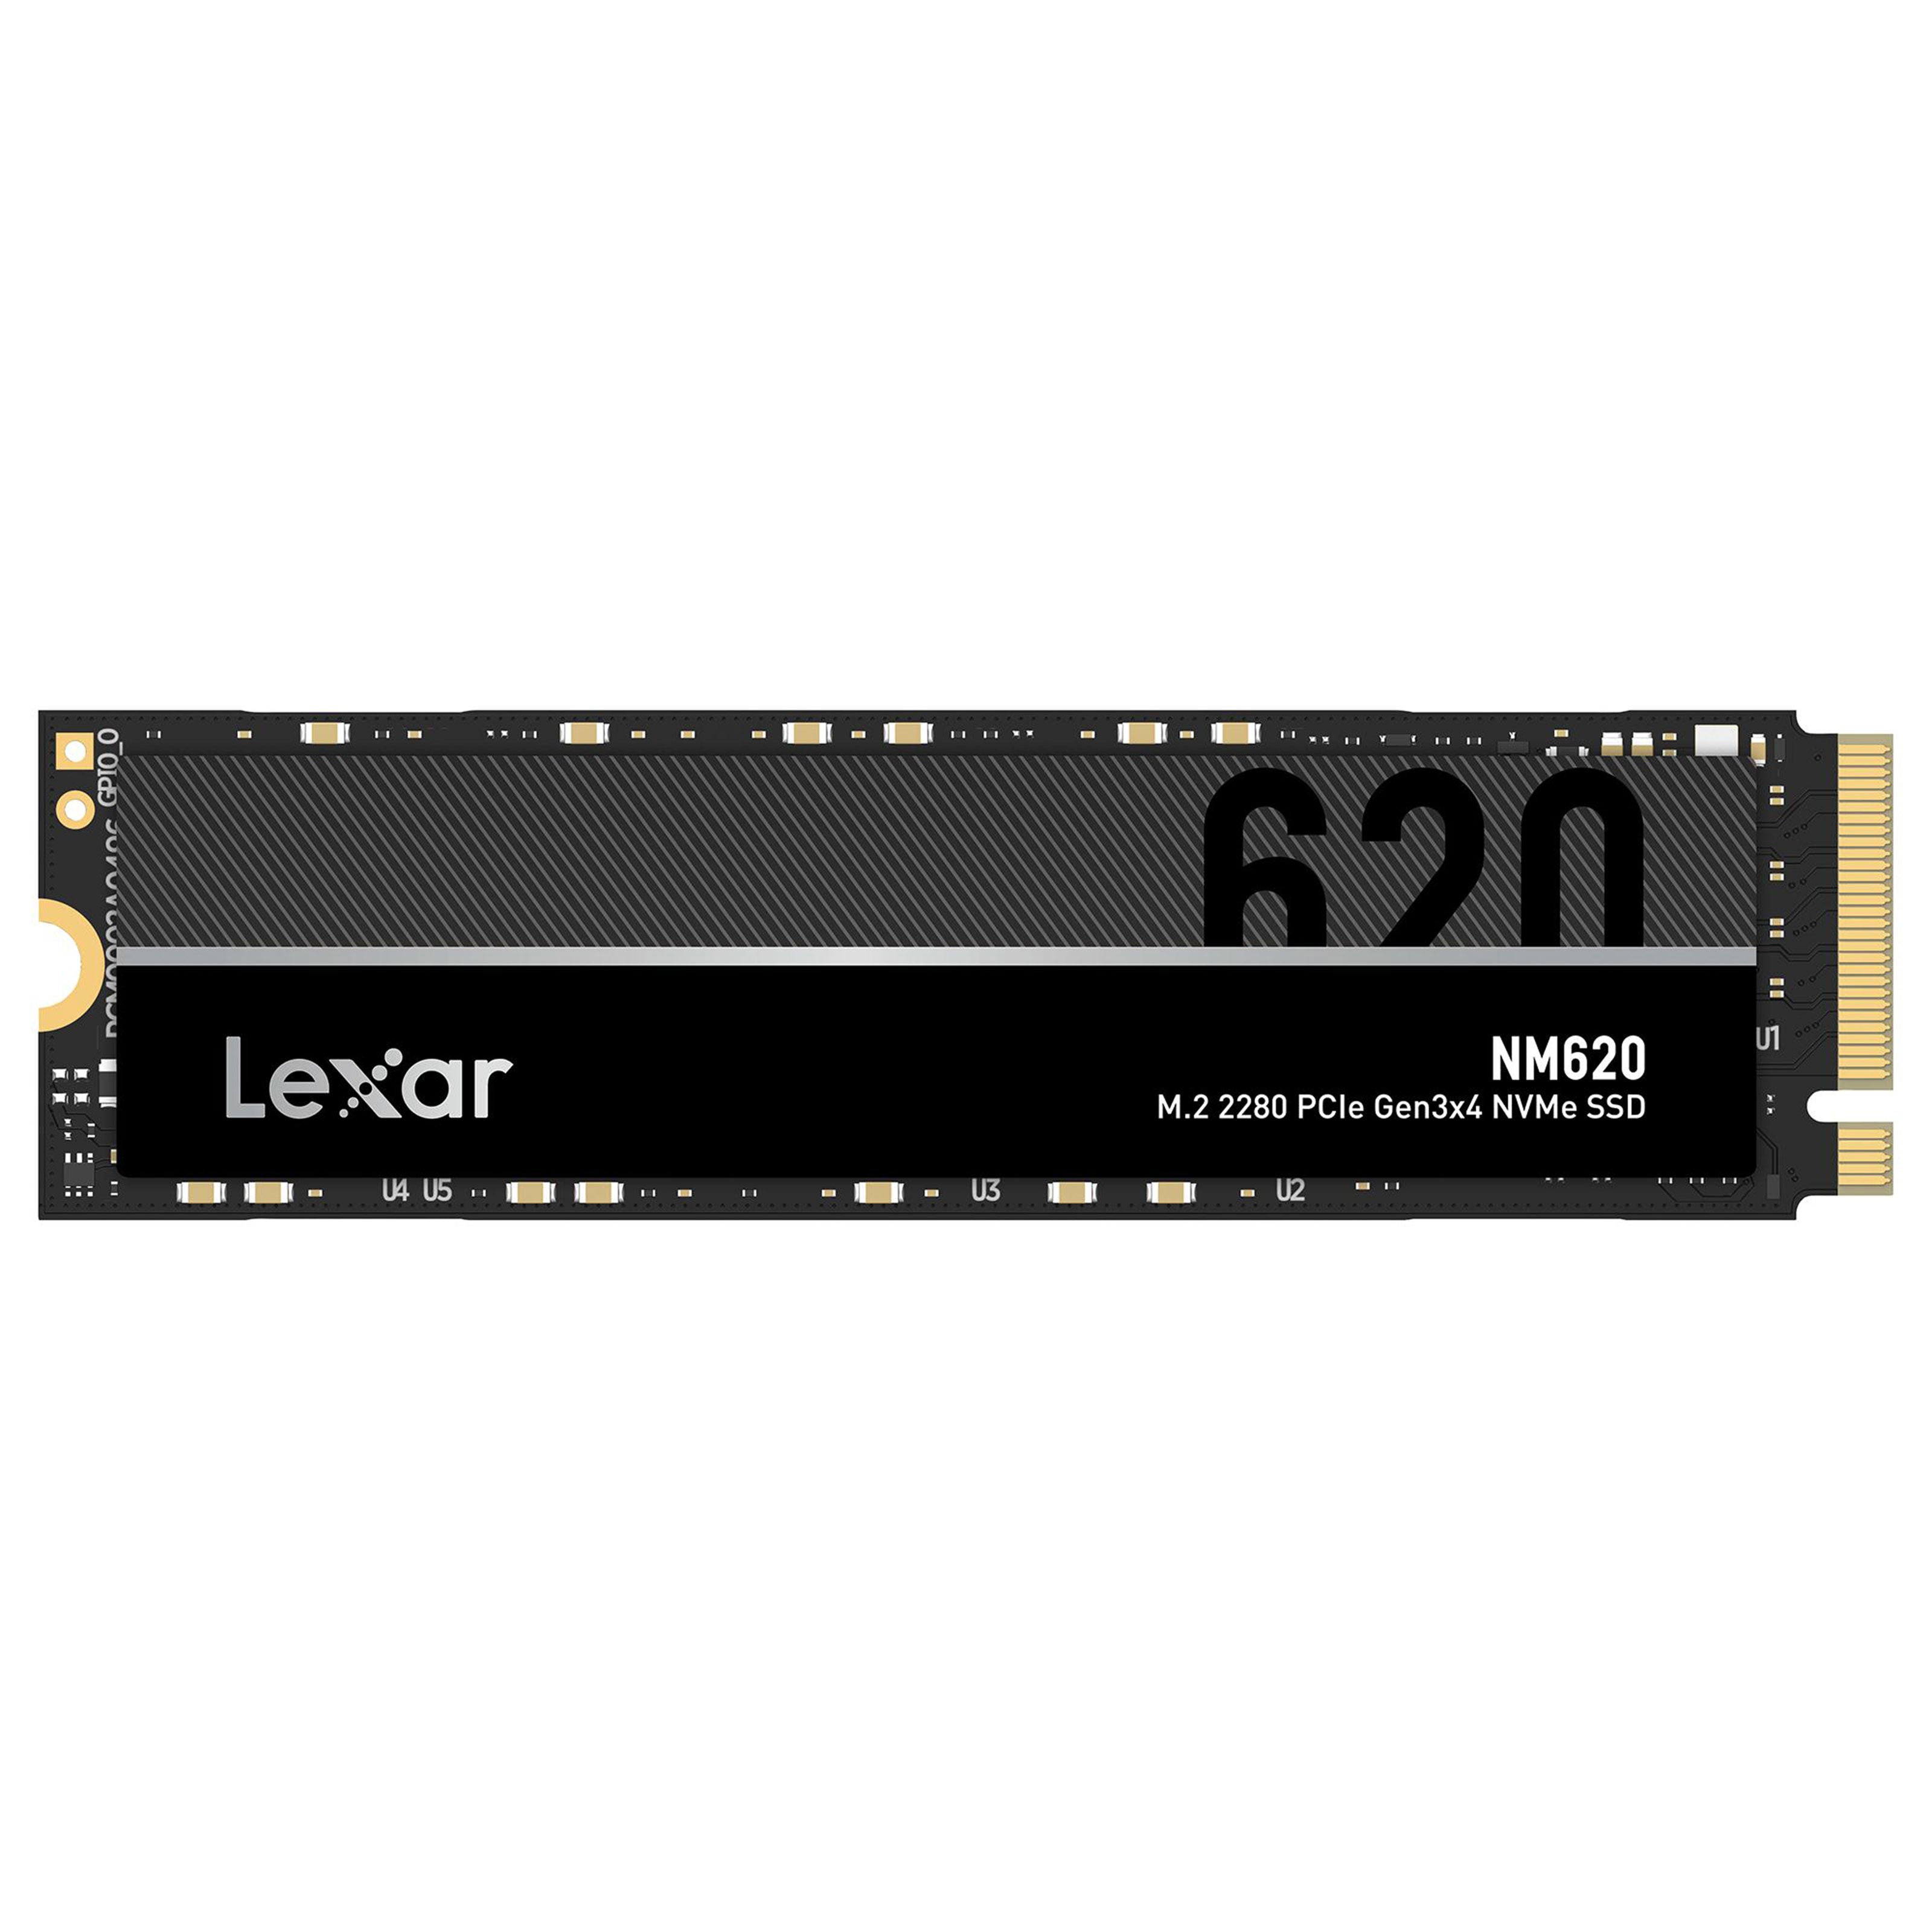 Lexar NM620 SSD 1TB PCIe M.2 NVME PCIe 3.0 x4 - Disponibile in 2-4 giorni lavorativi